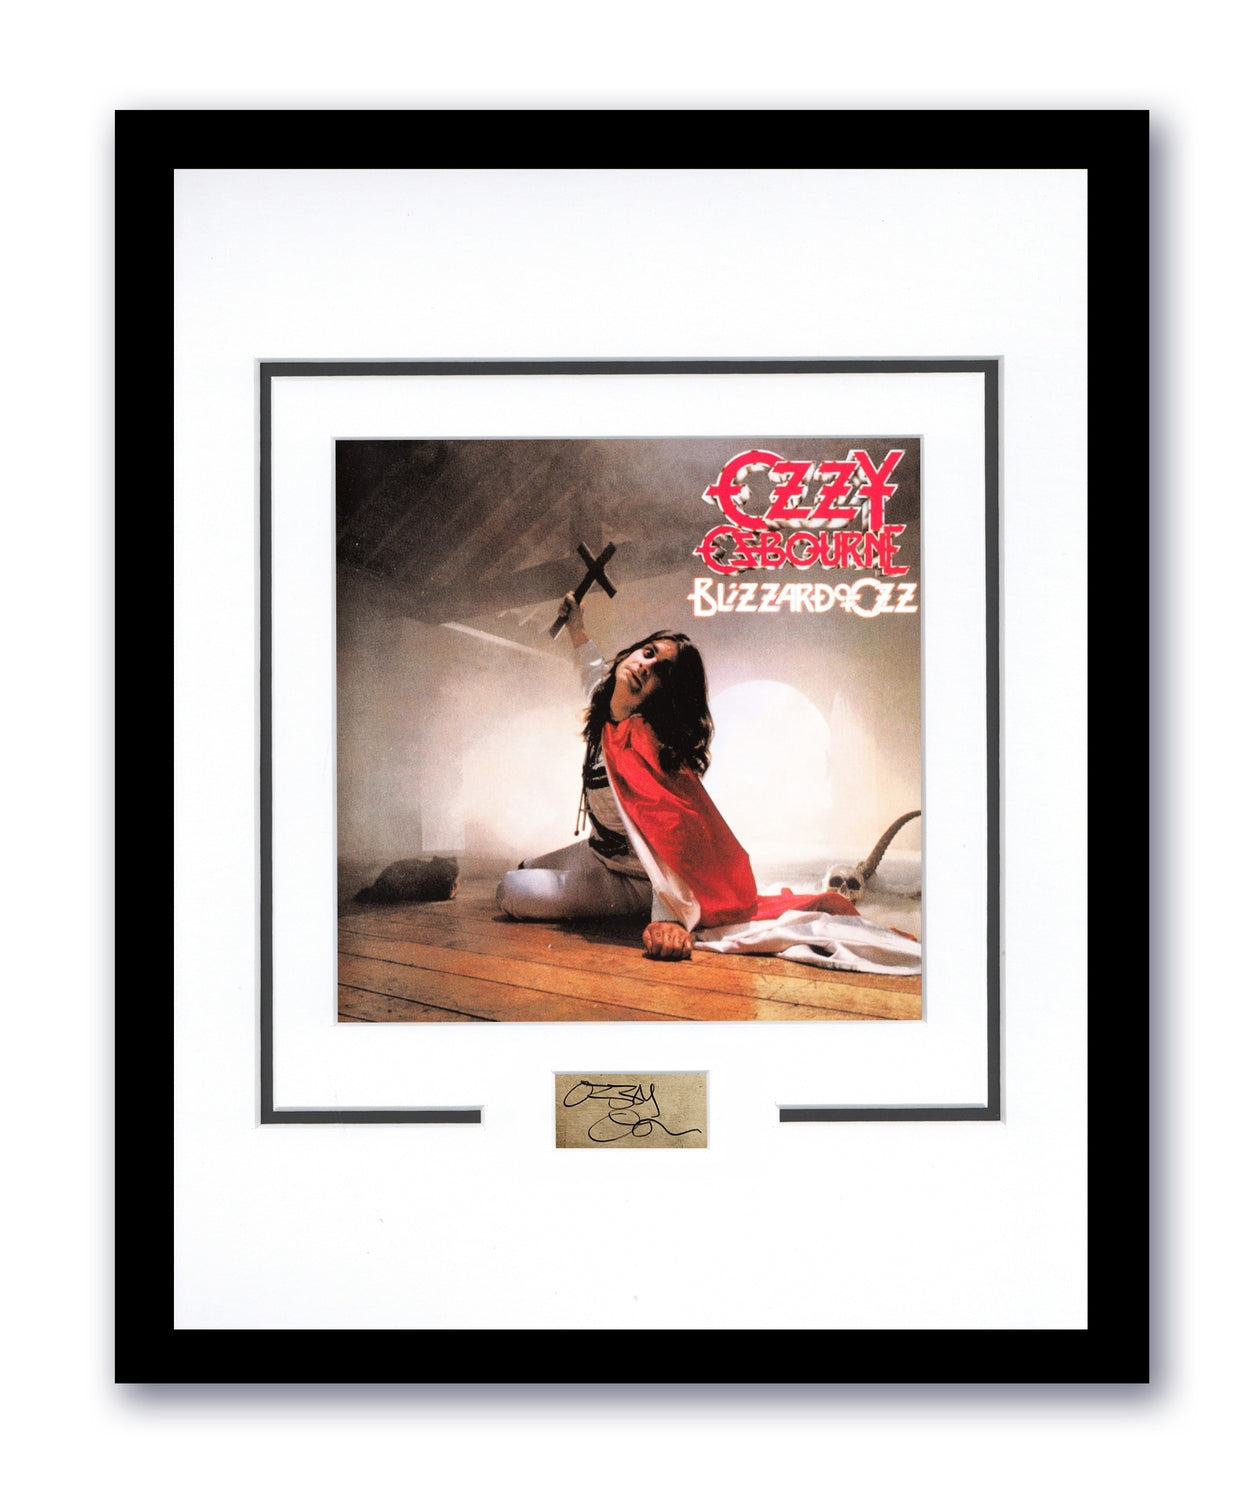 Ozzy Osbourne Autographed Signed 11x14 Framed Photo Blizzard of Ozz ACOA